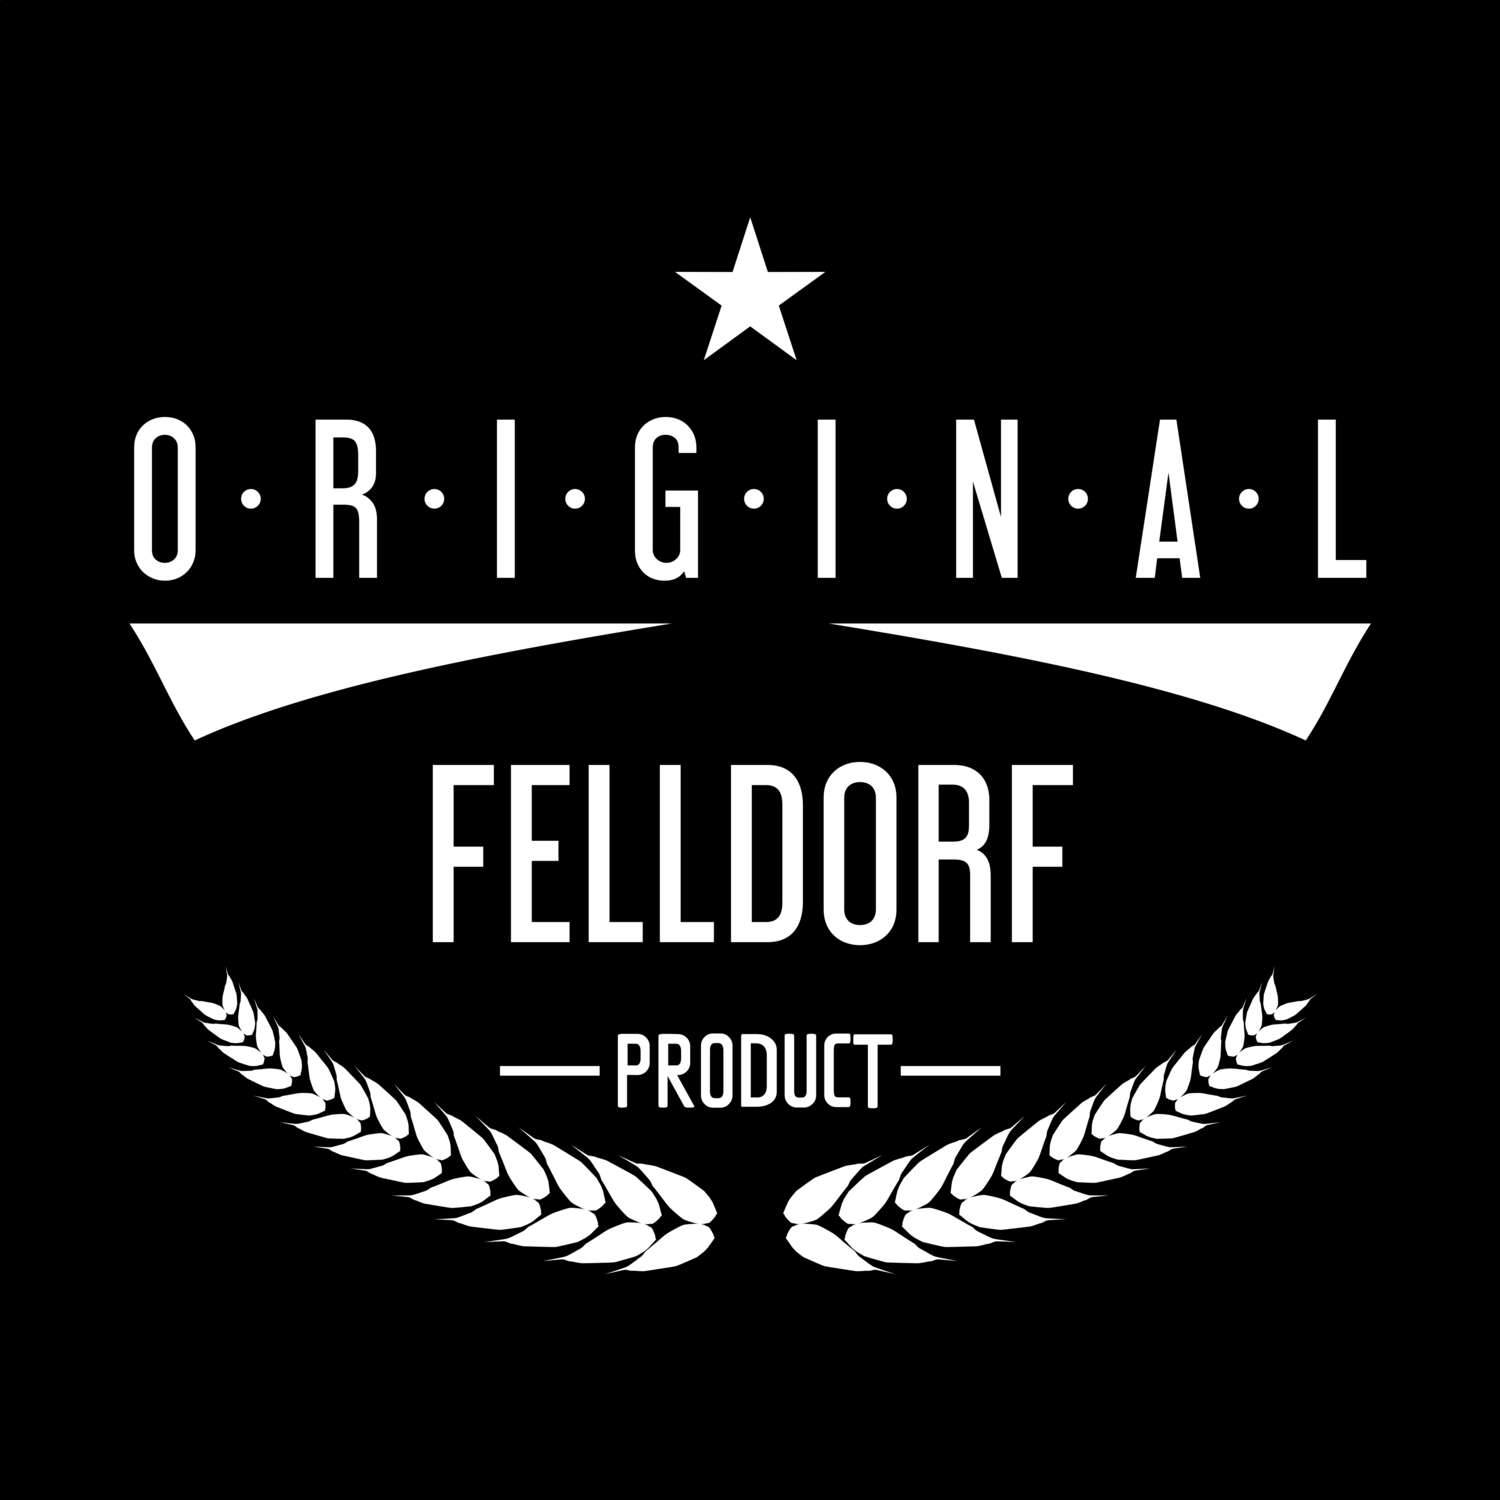 Felldorf T-Shirt »Original Product«